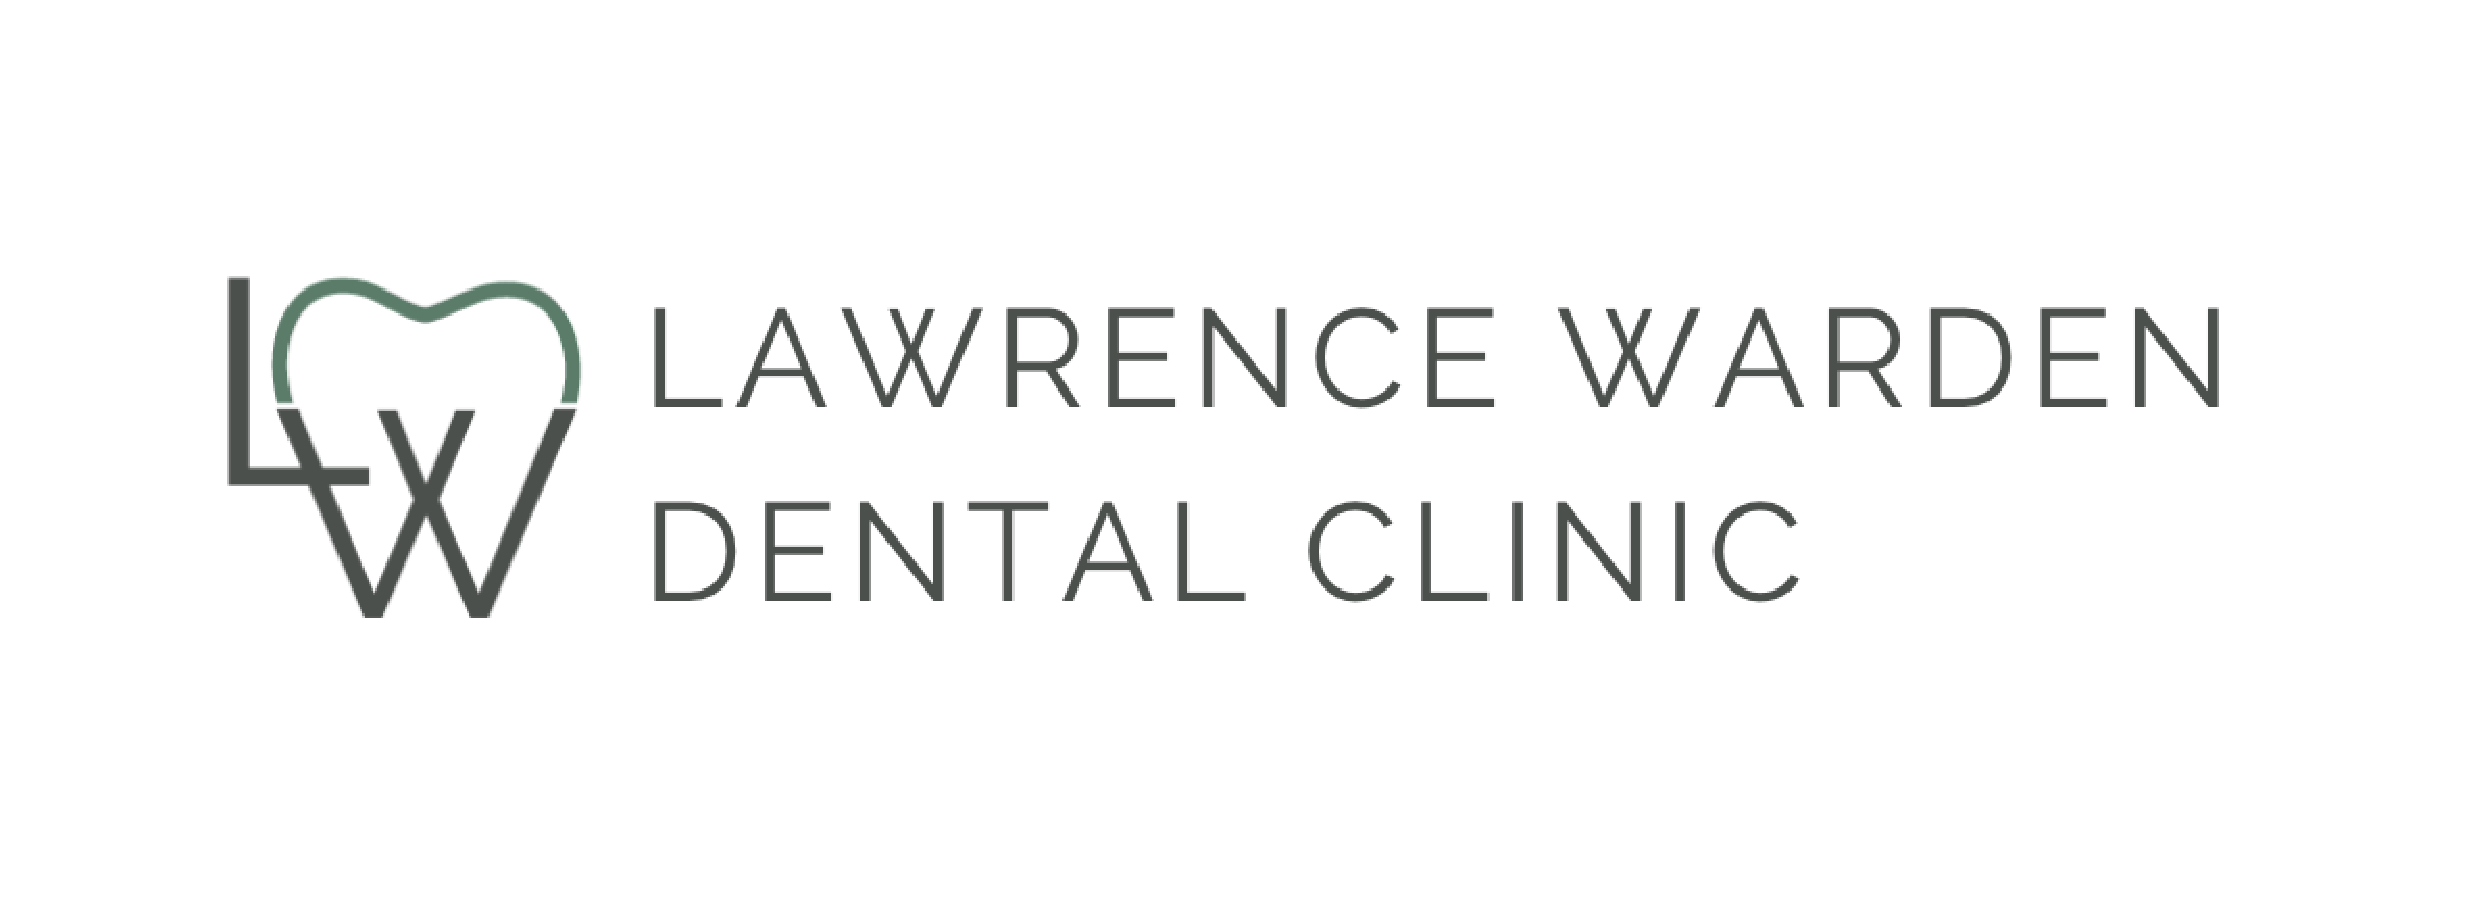 Lawrence Warden Dental Clinic